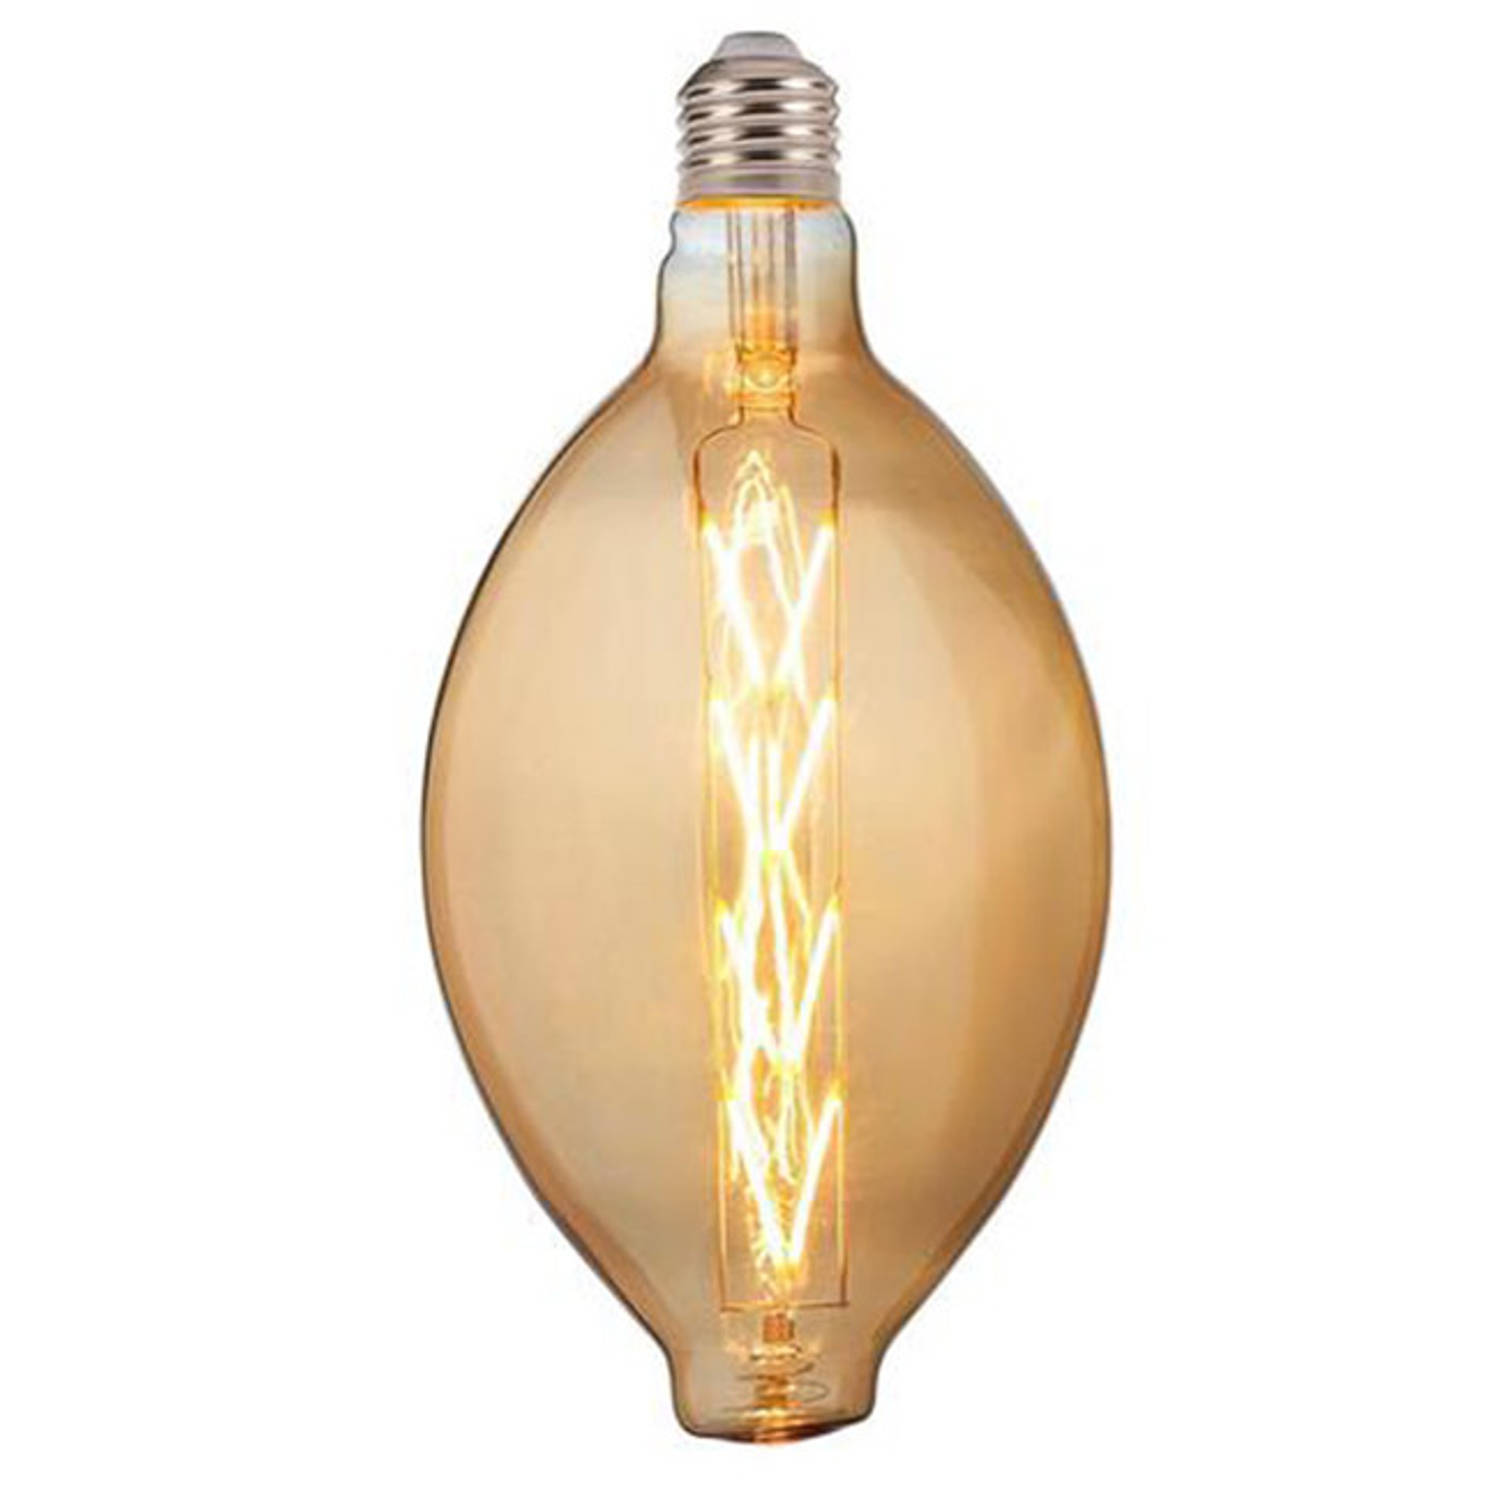 Led Lamp - Design - Elma - E27 Fitting - Amber - 8w - Warm Wit 2200k